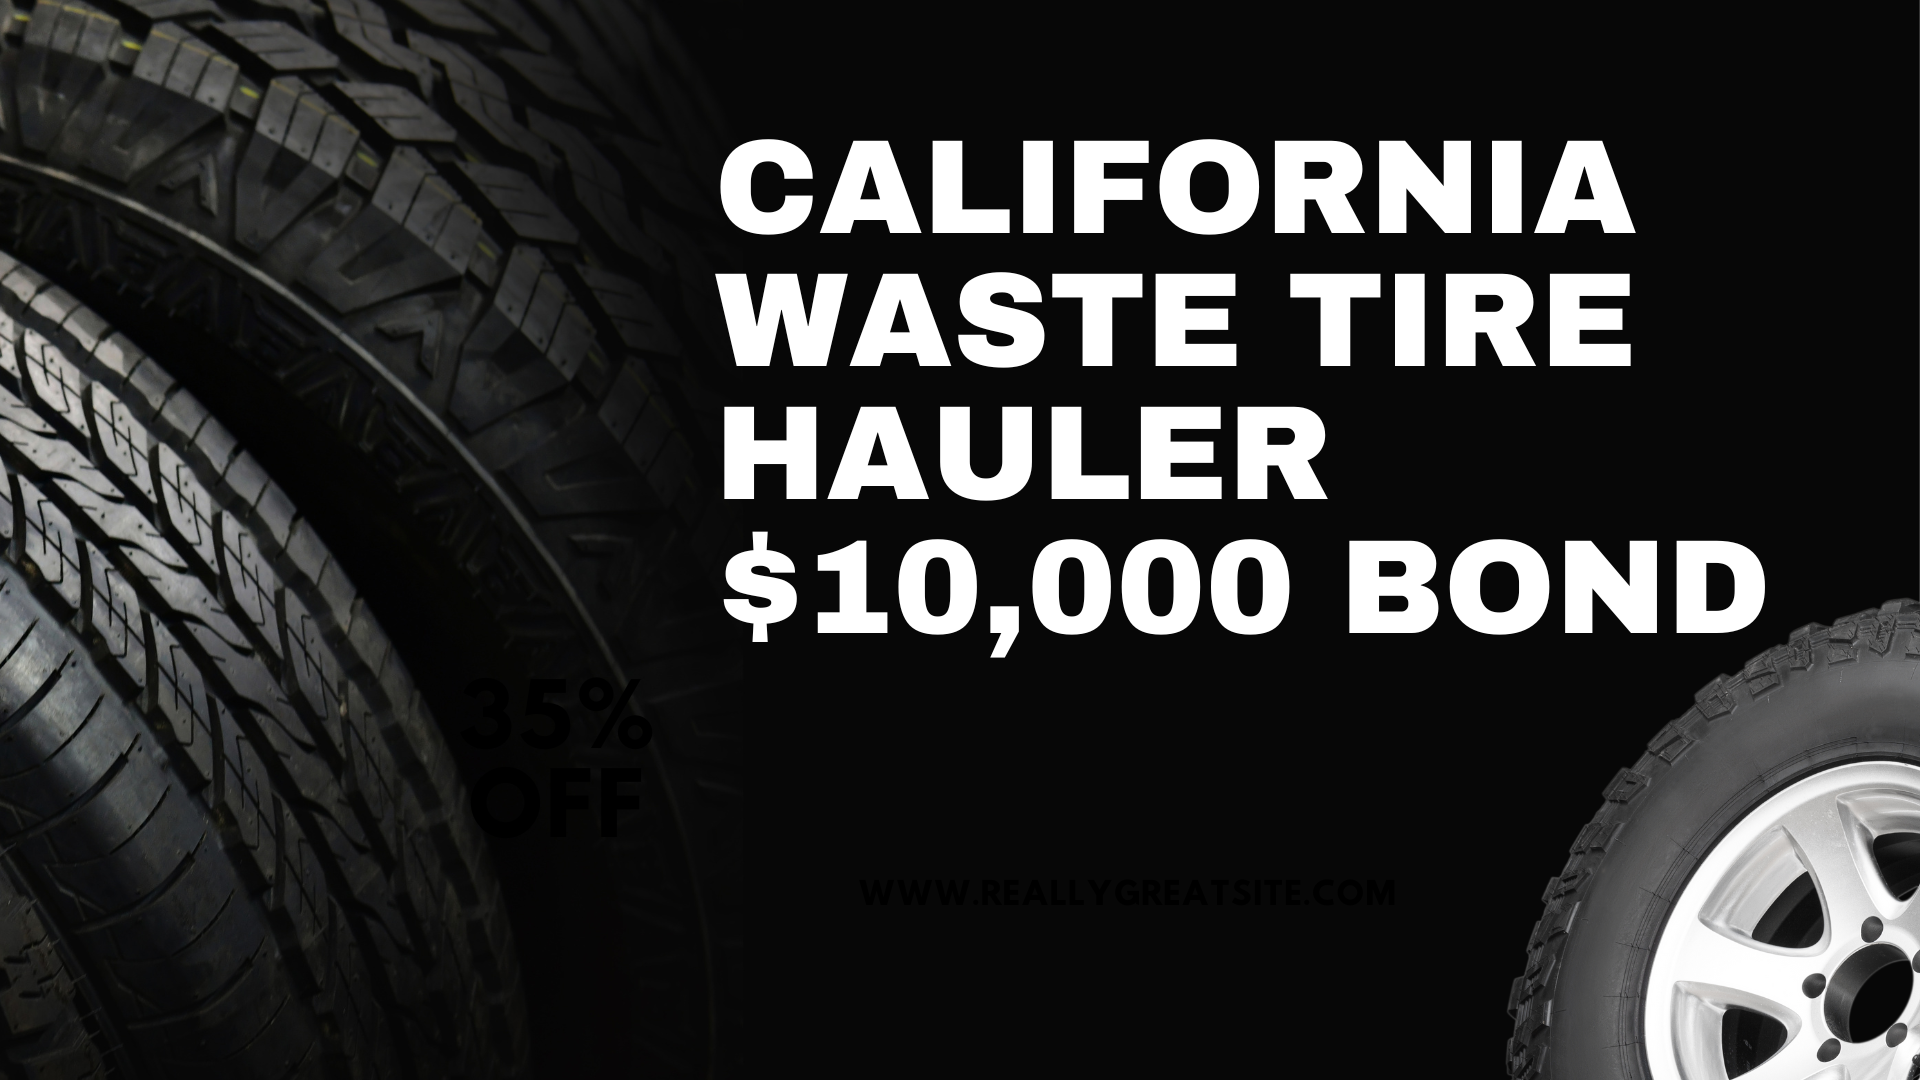 California Waste Tire Hauler $10,000 Bond